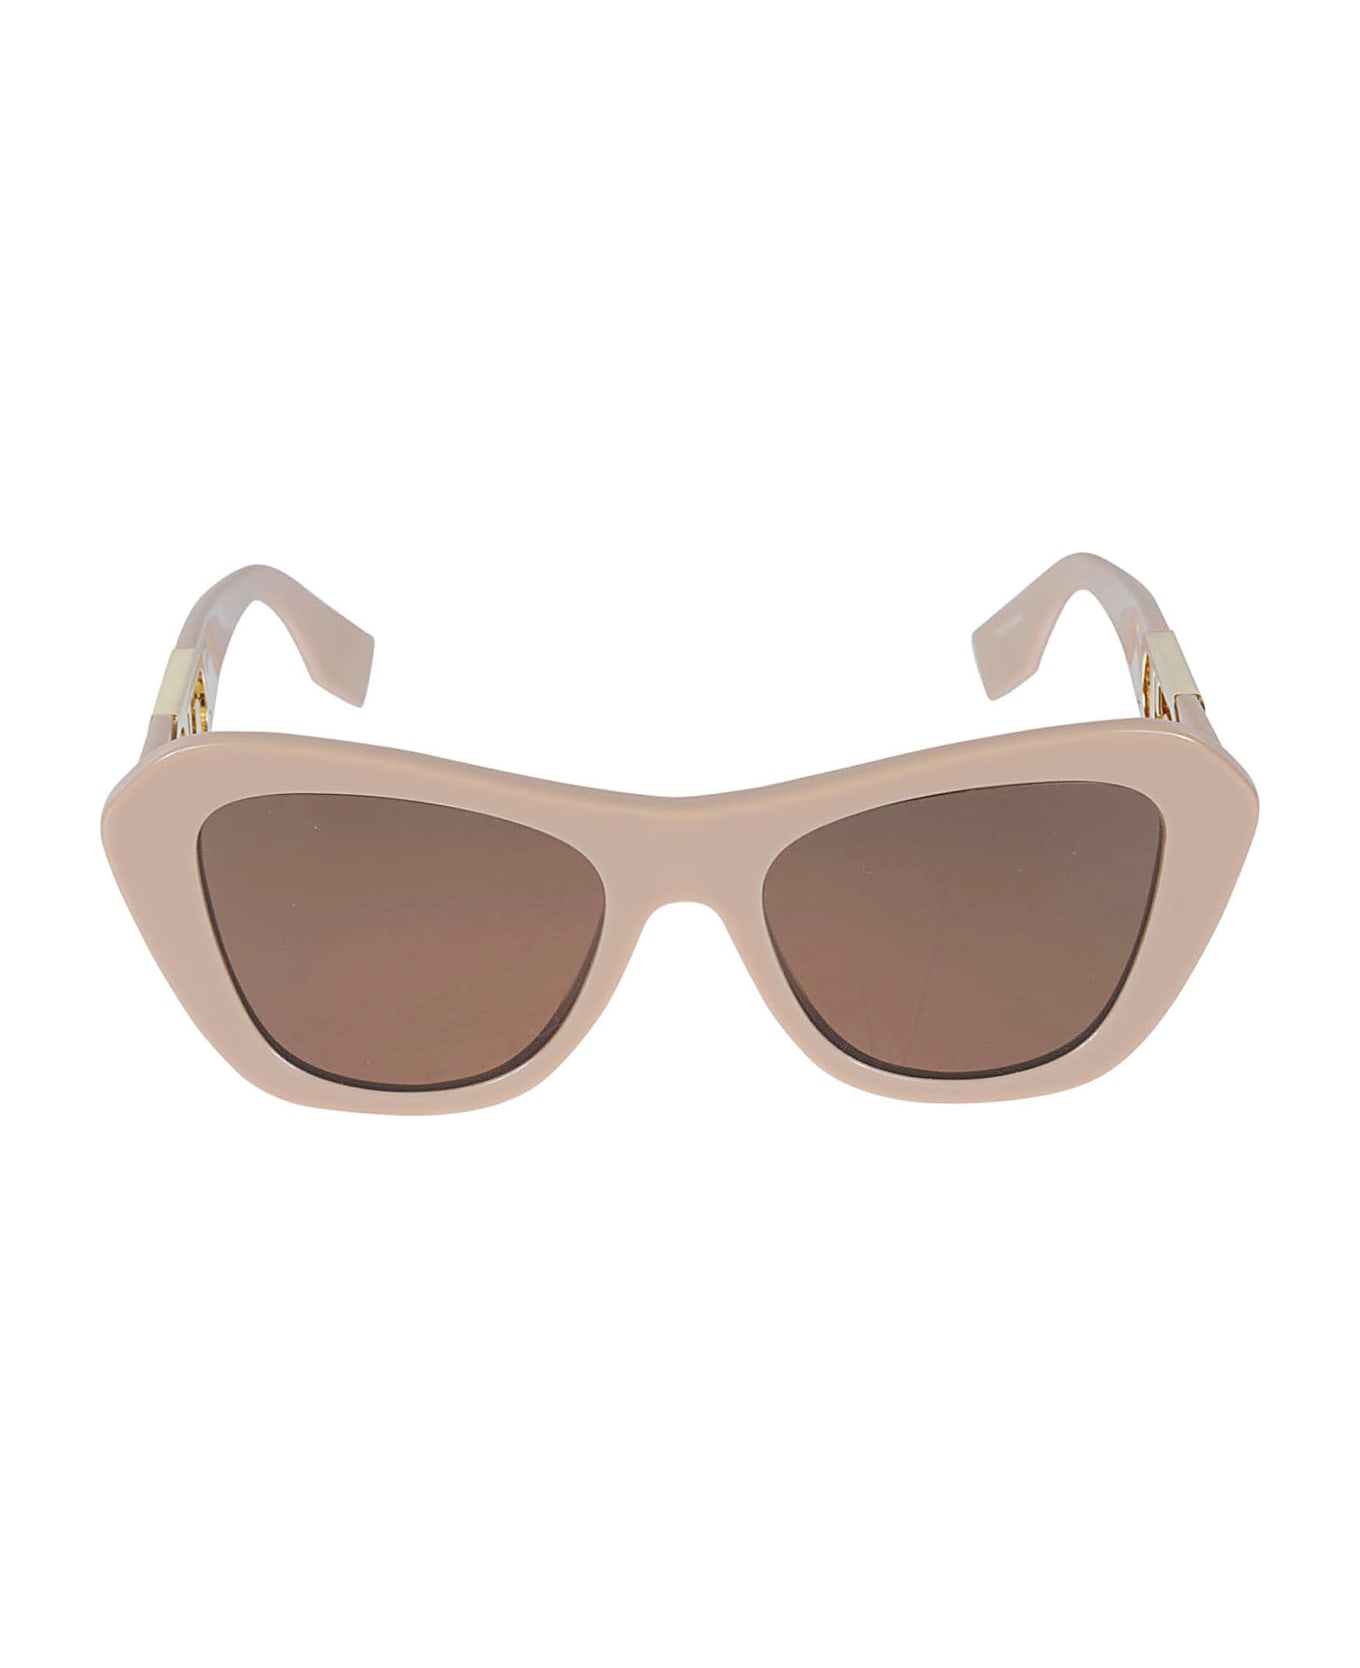 Fendi Eyewear Wayfarer Sunglasses Drift - 57e